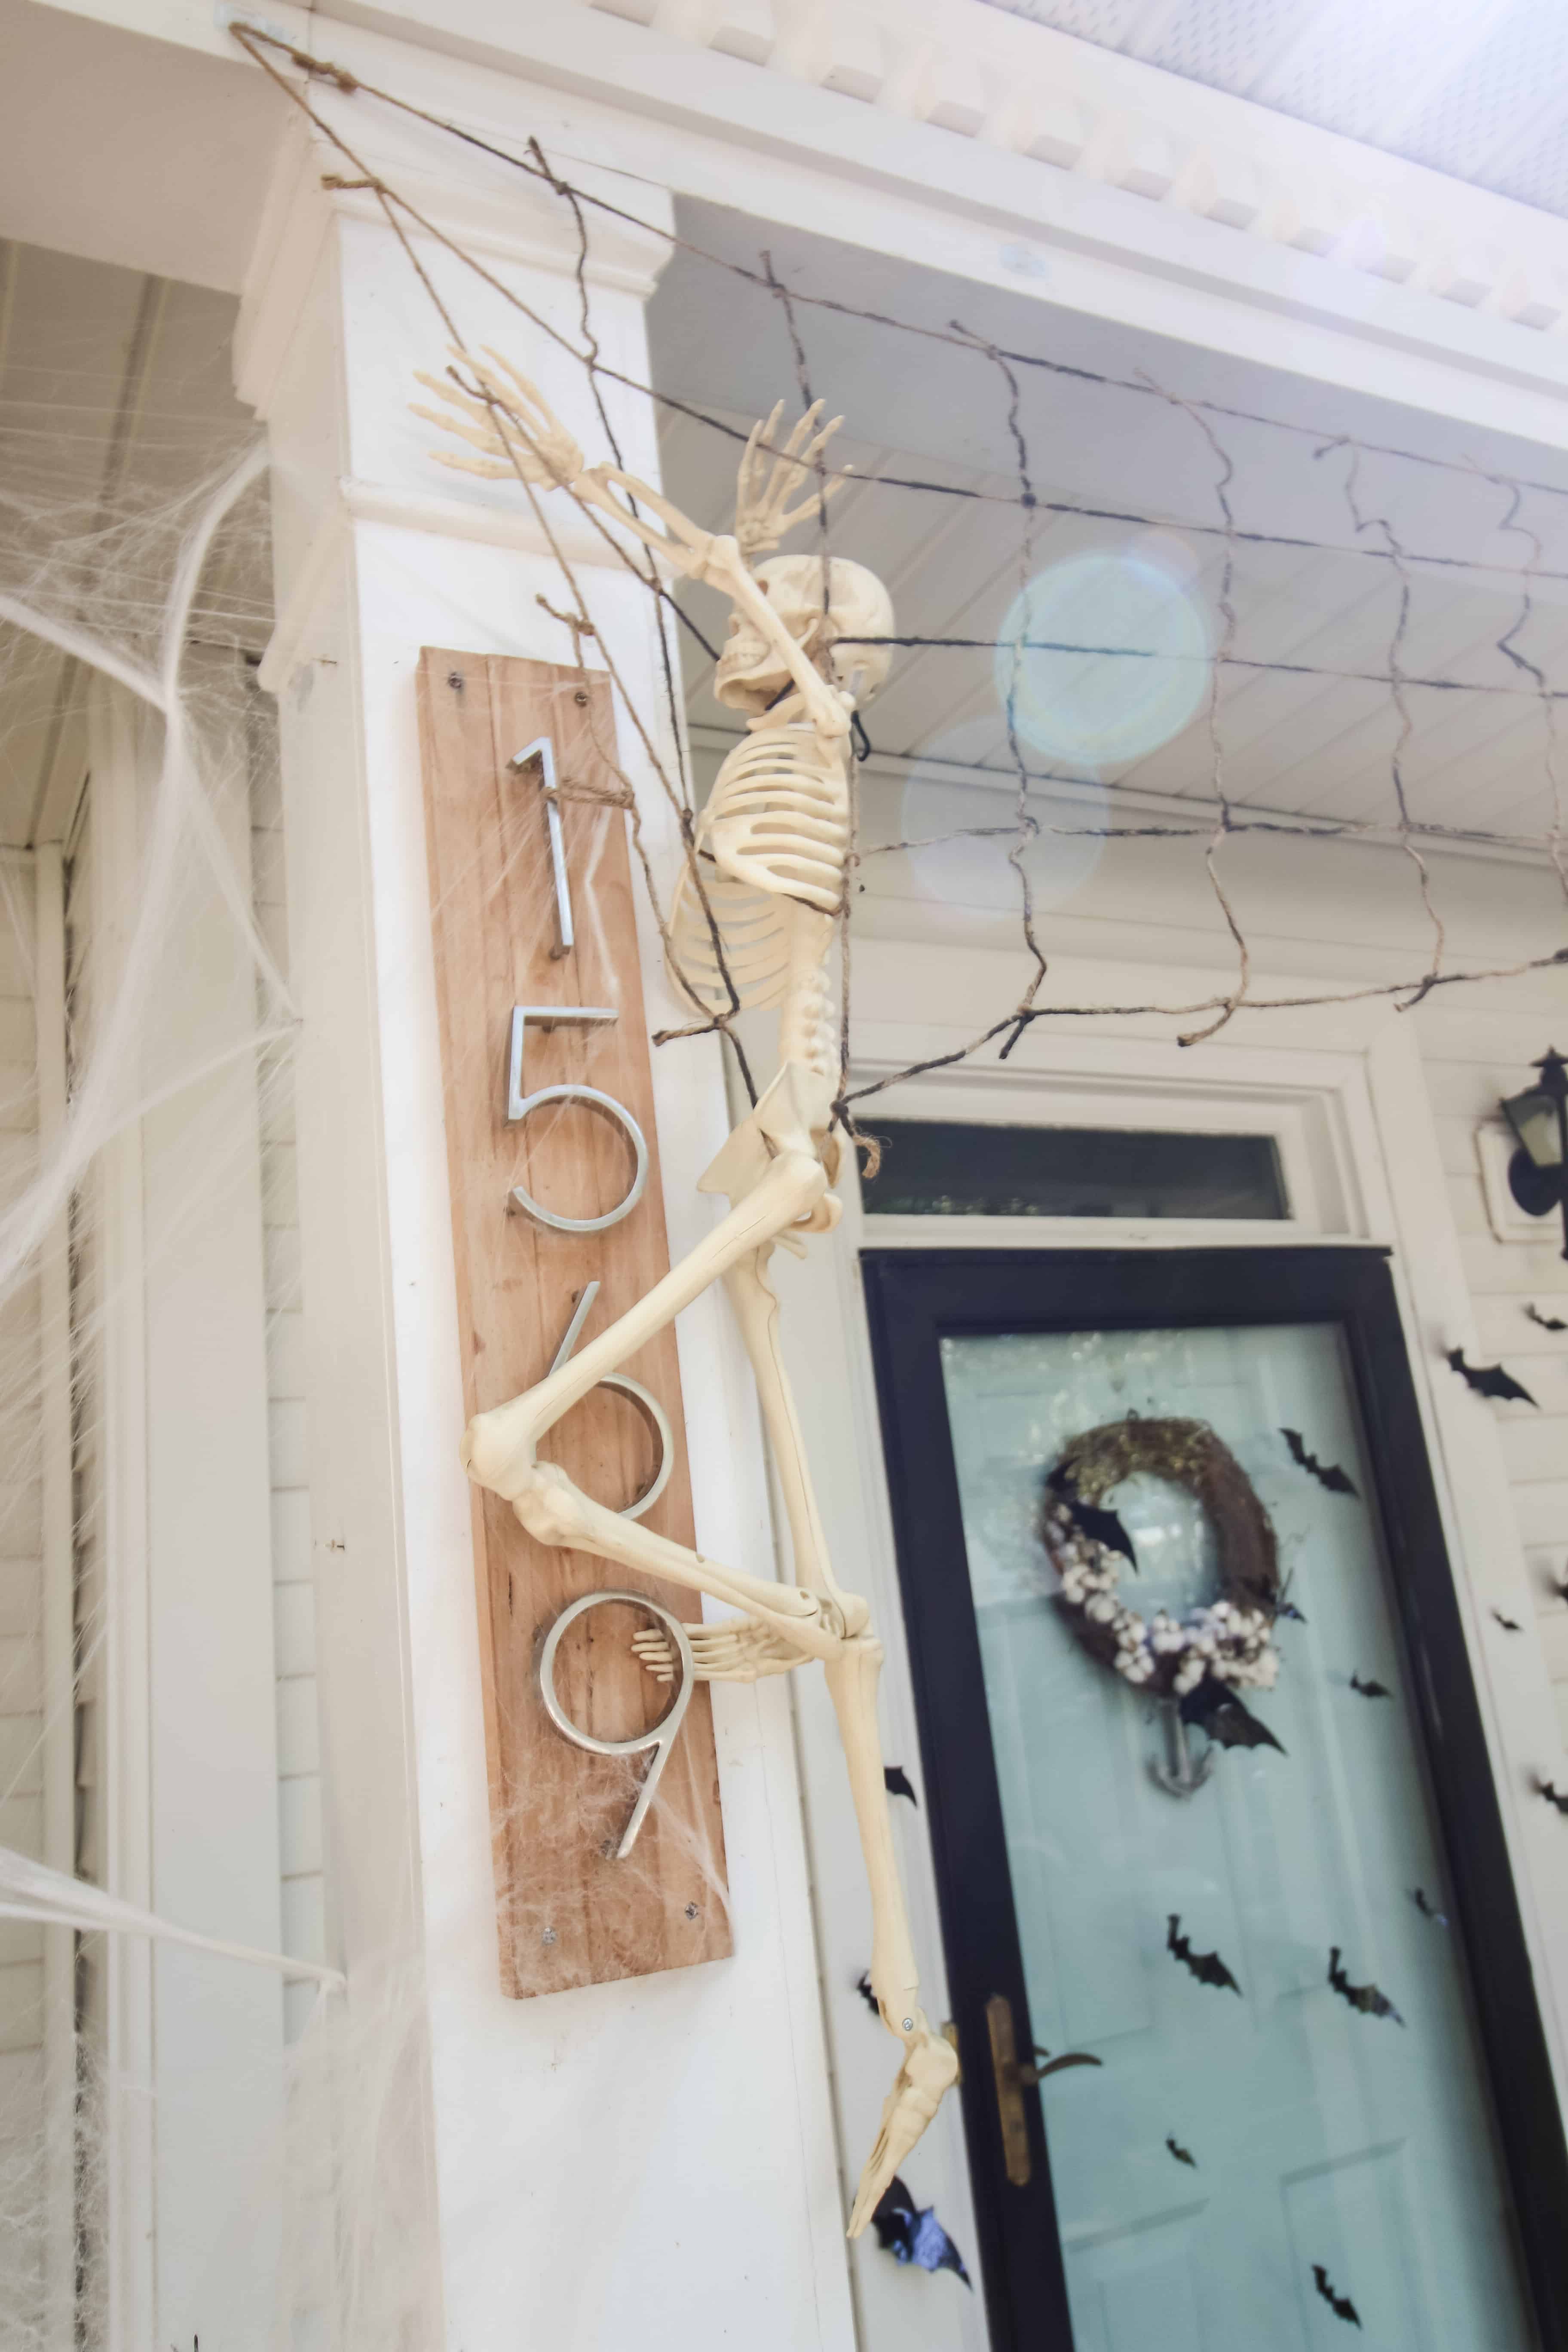 Our Skeleton Pirate Halloween Yard Display